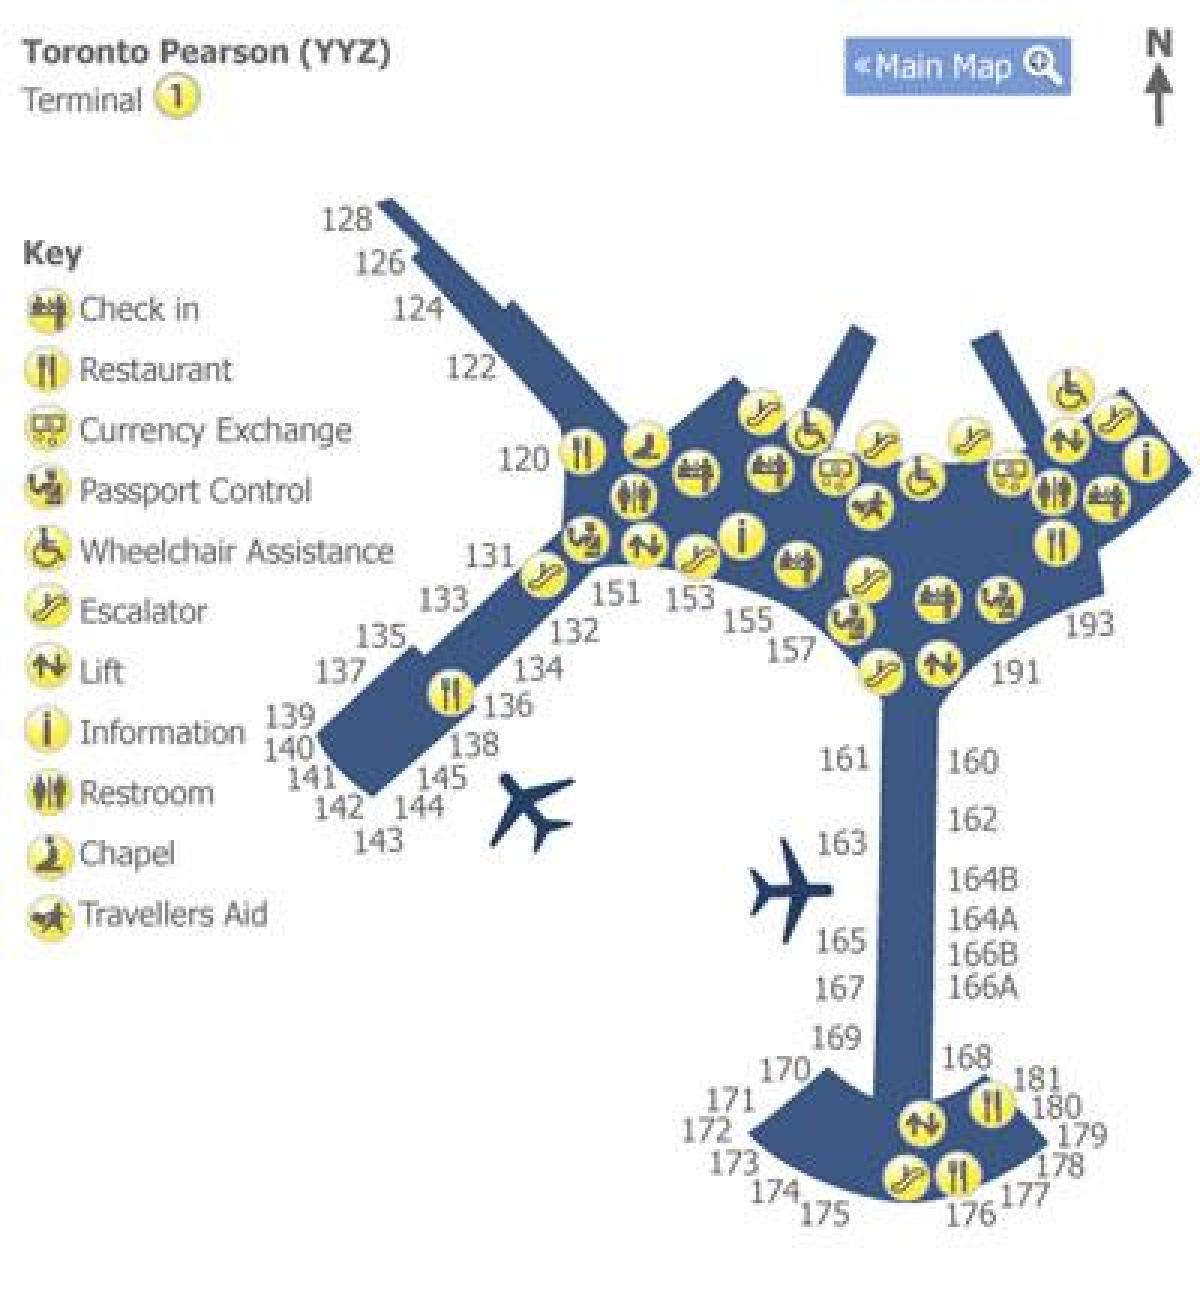 Peta dari Toronto Pearson airport terminal 1